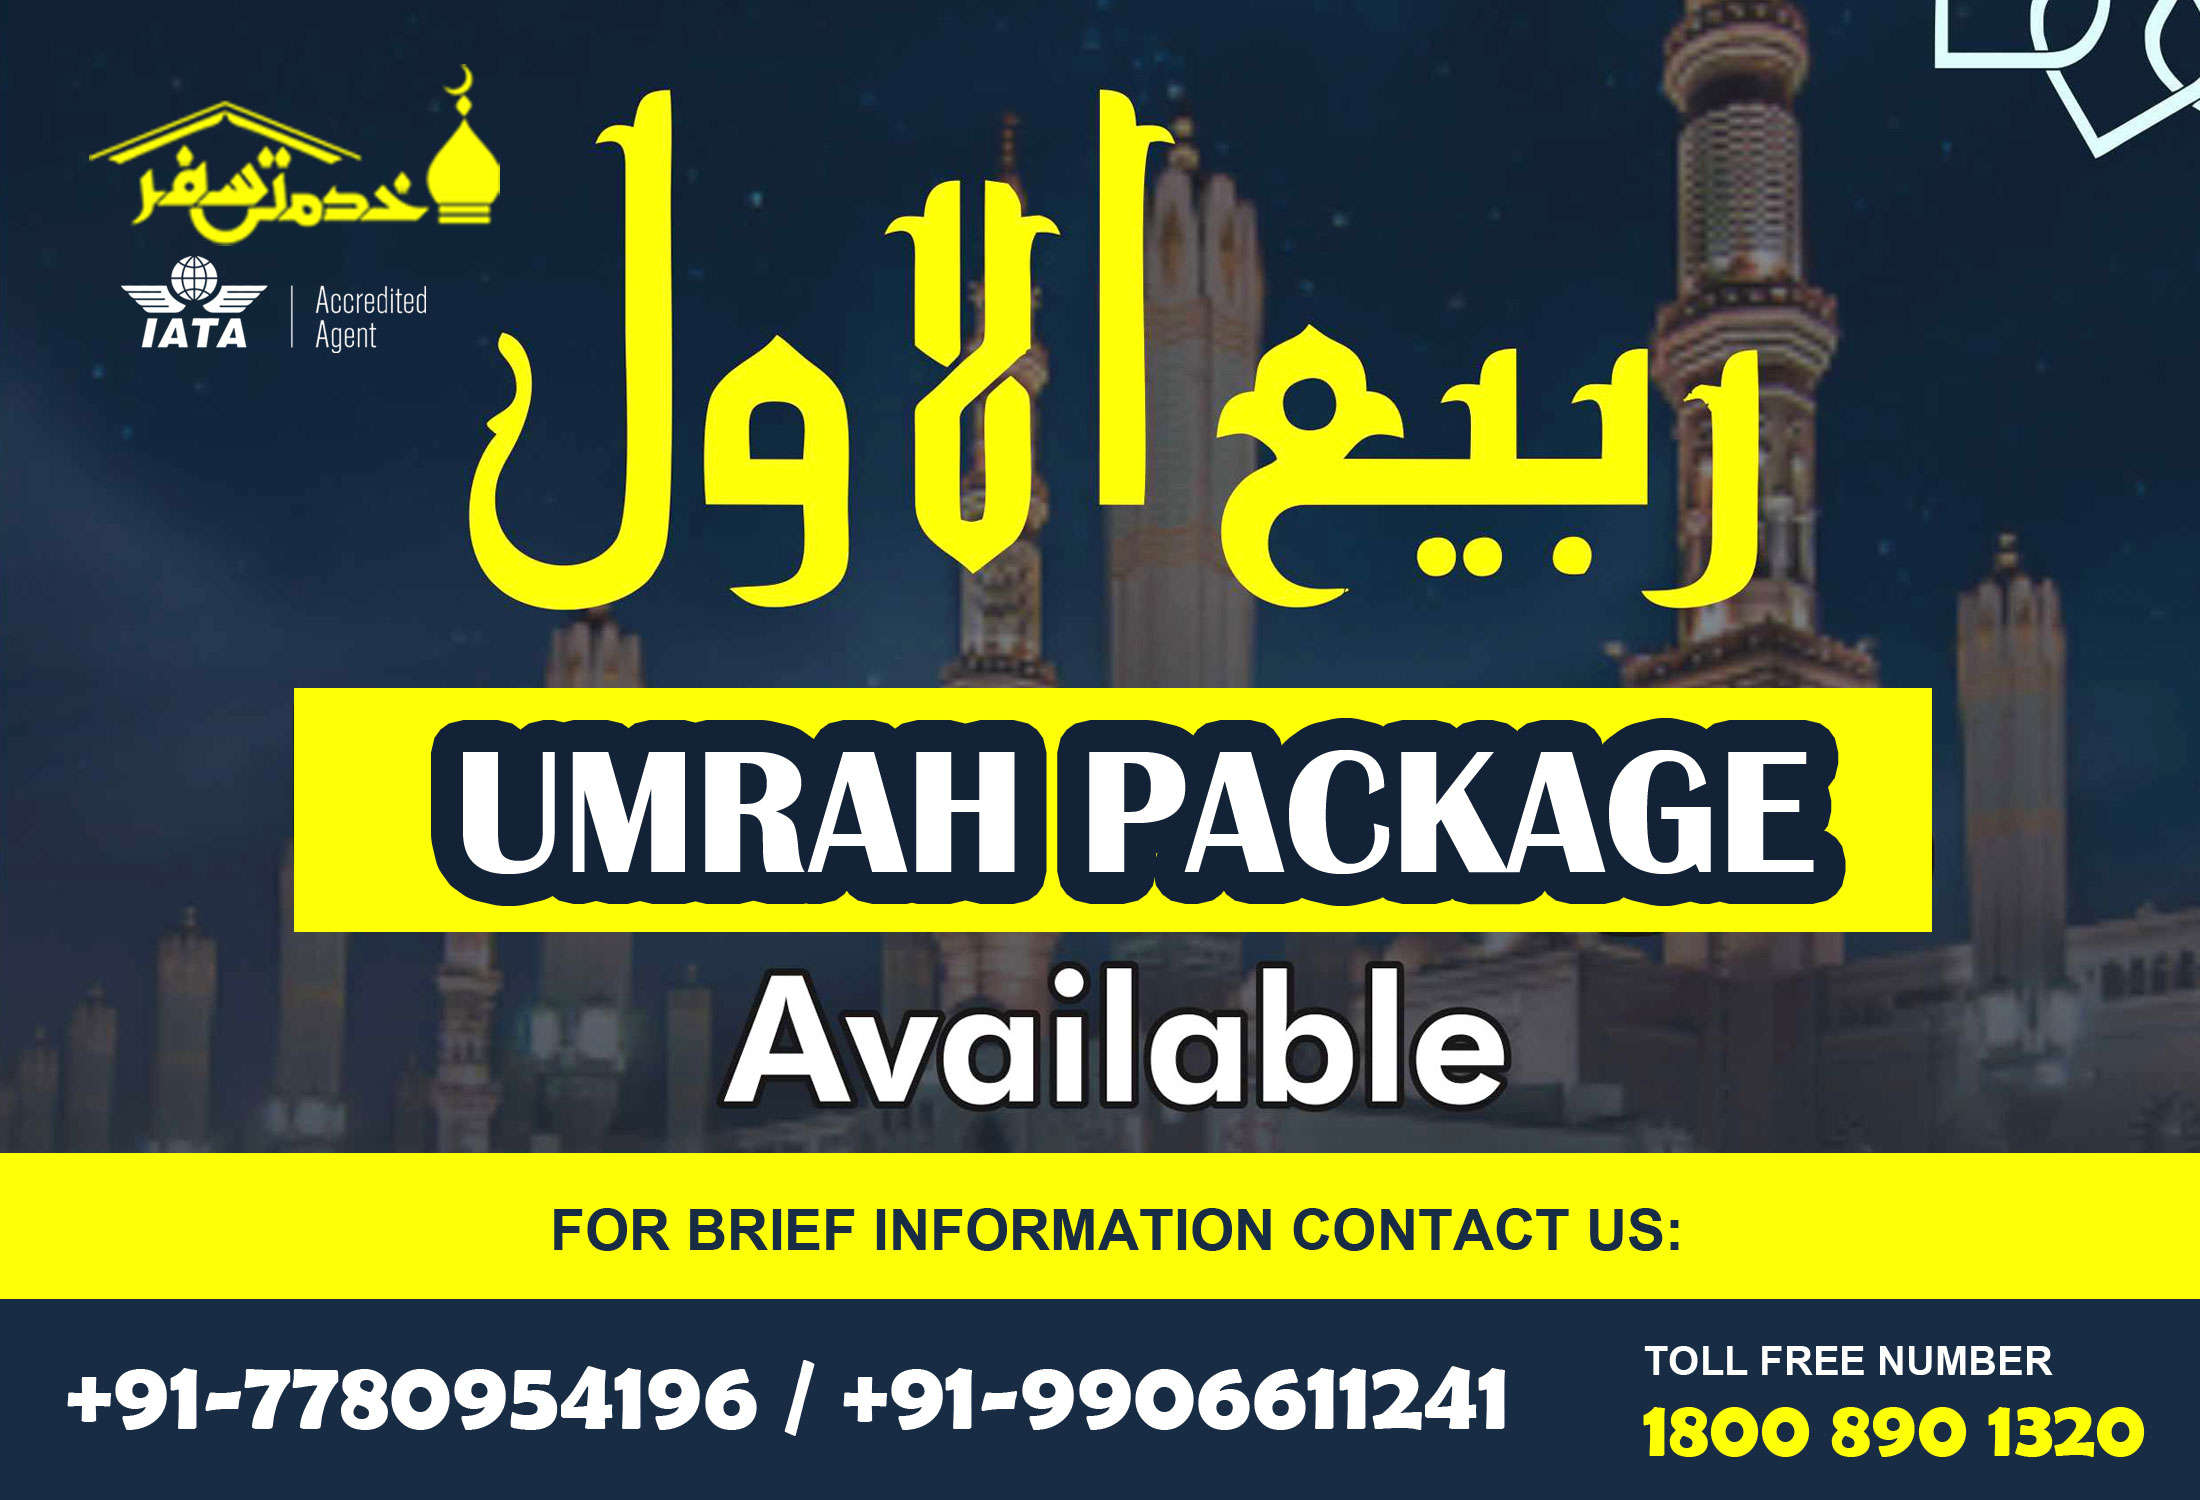 Umrah Package and Umrah Service